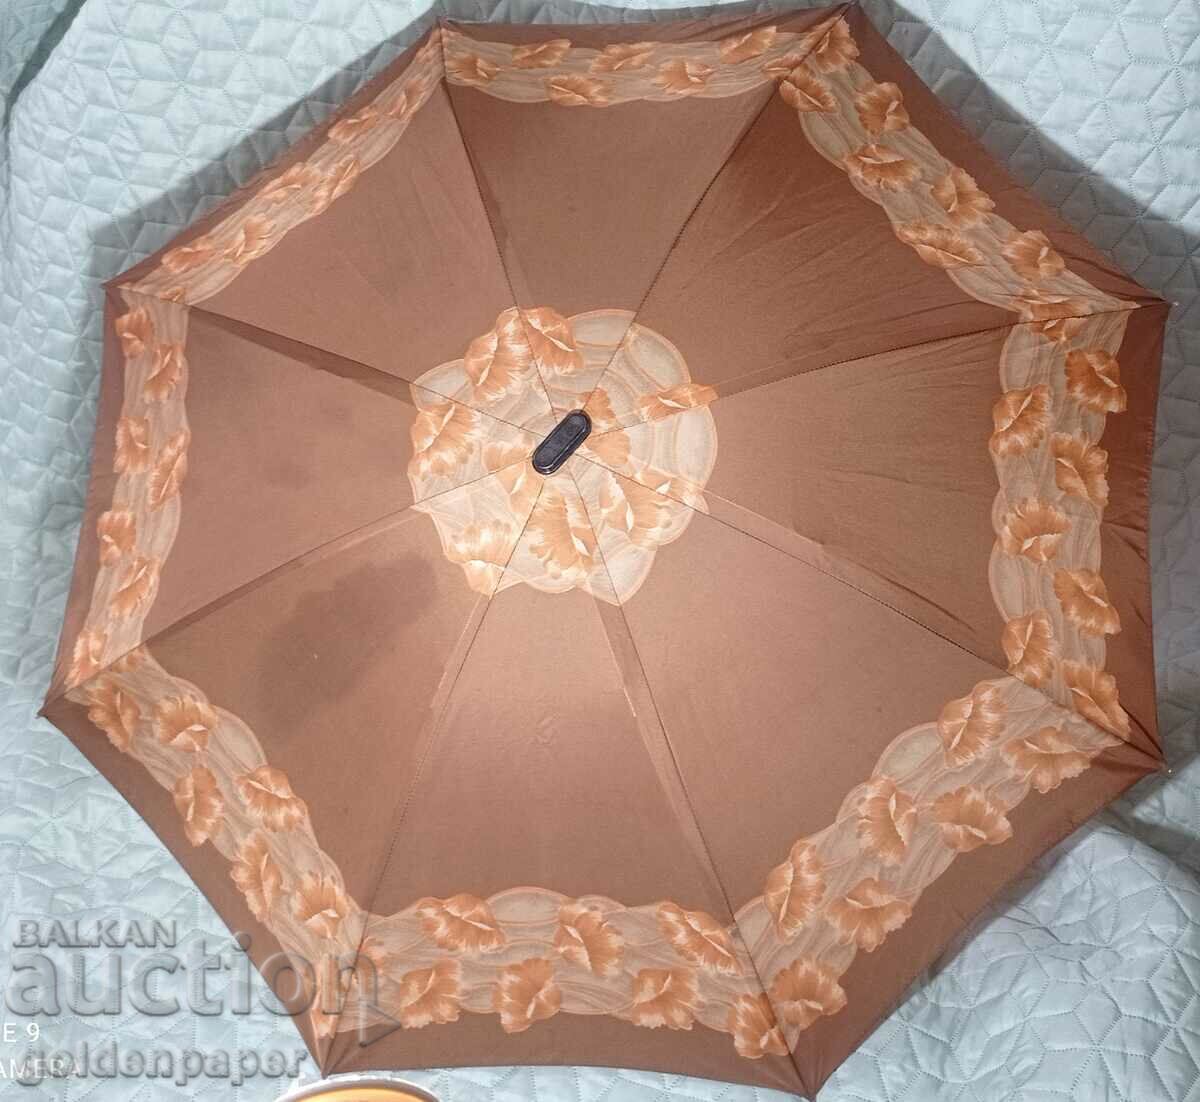 German Lord & Lady Umbrella